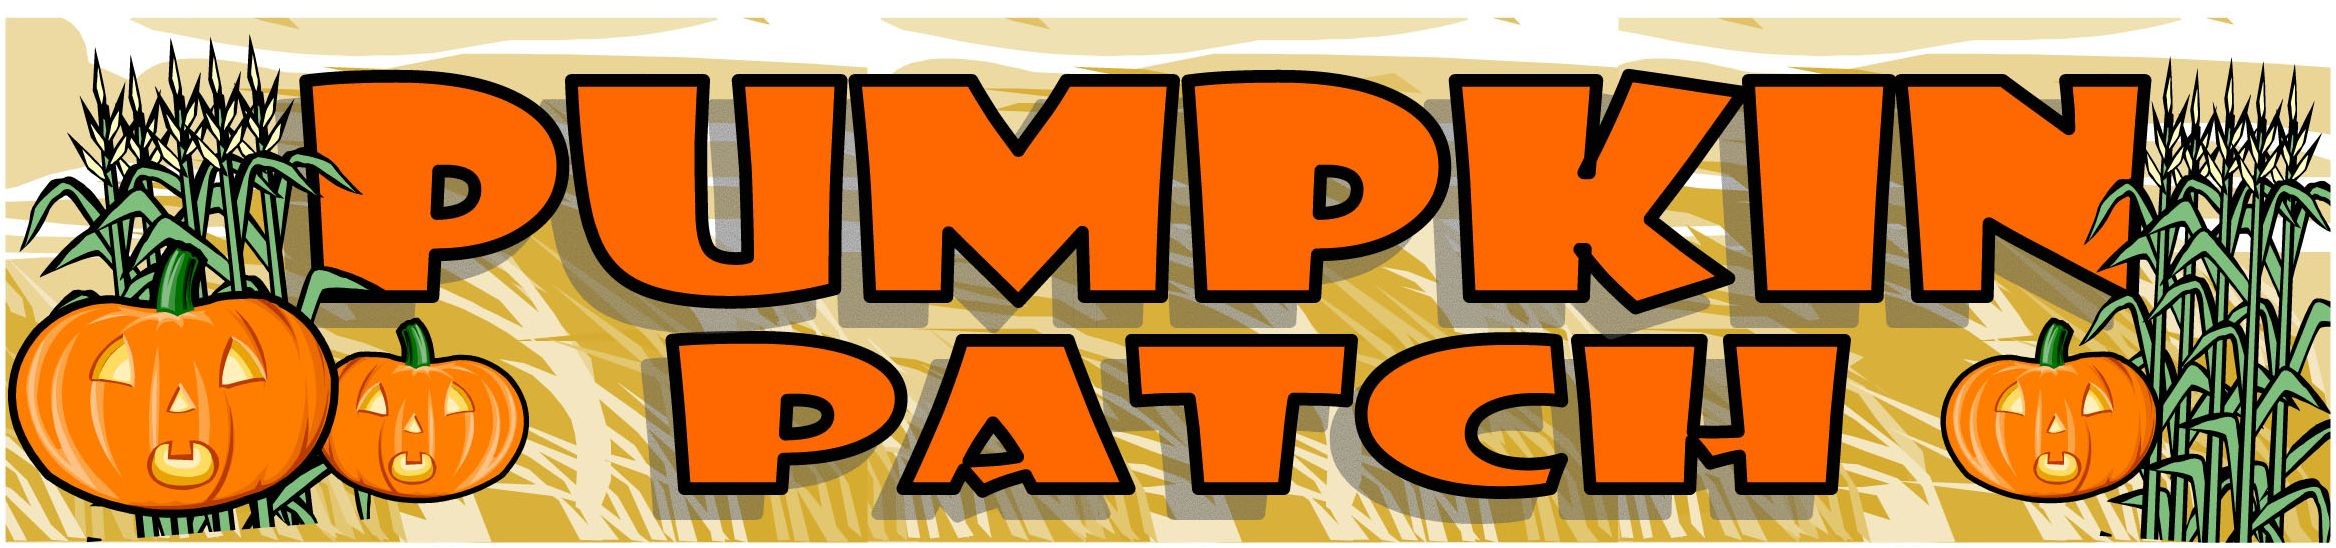 45+ Clipart Pumpkin Patch Field Trip Images